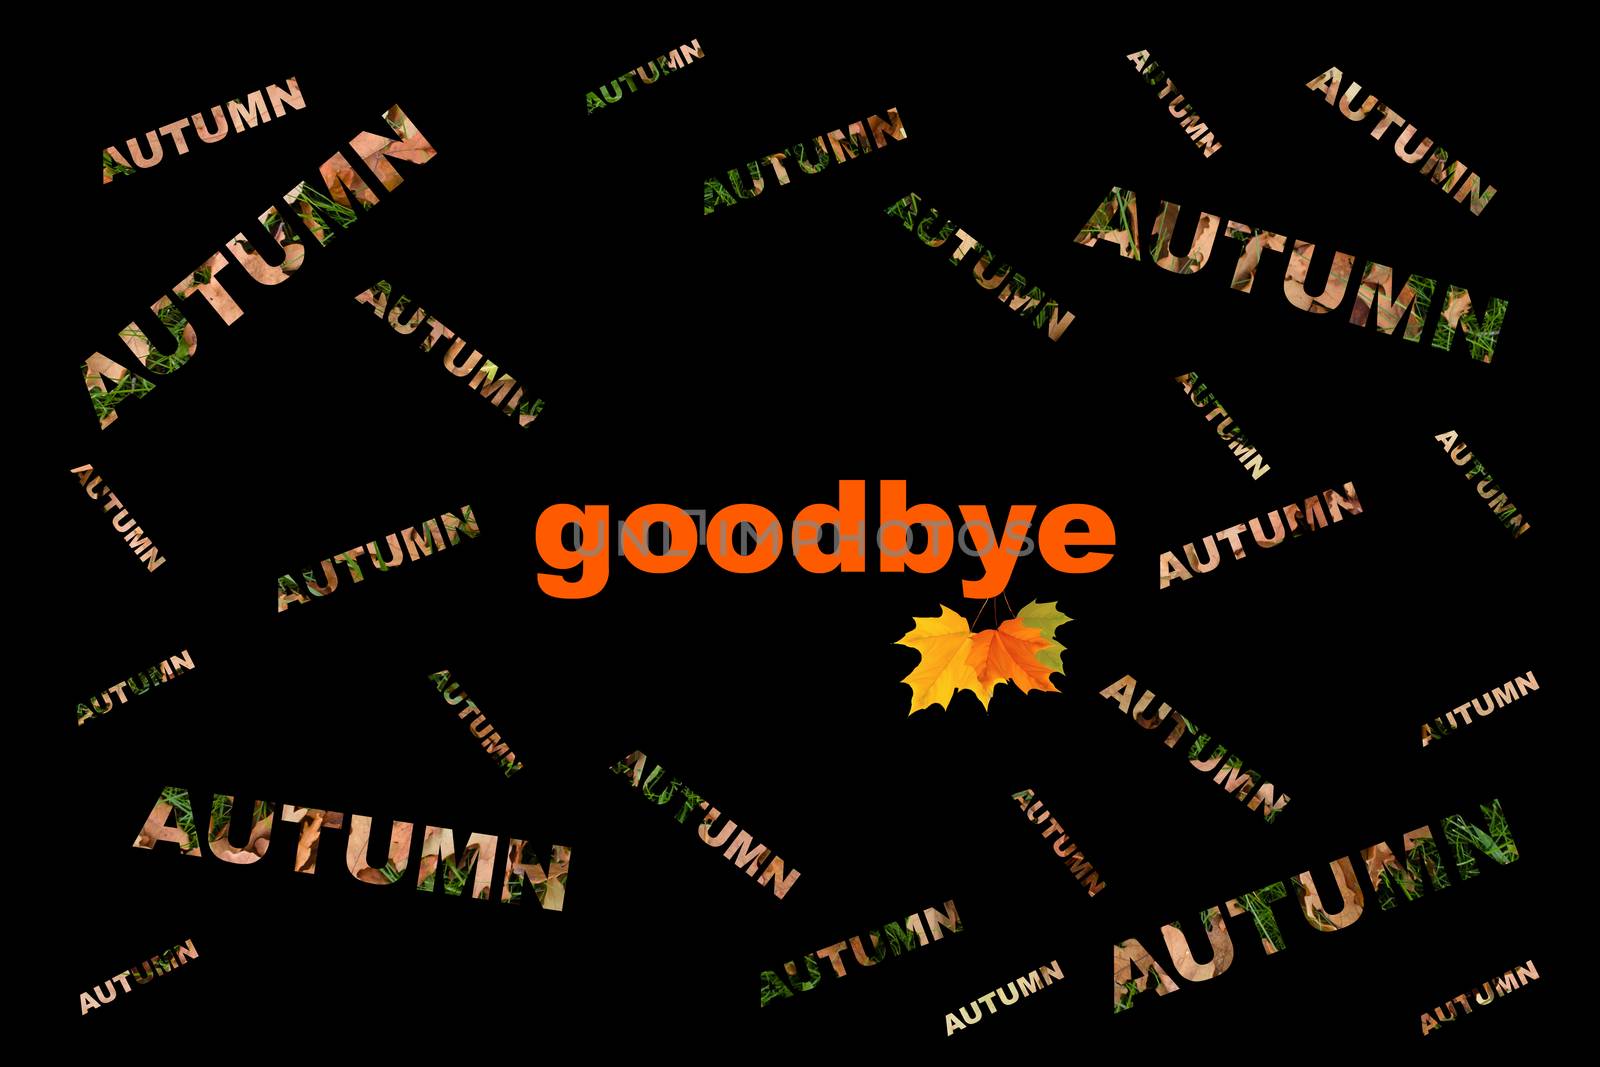 The slogan "Autumn goodbye" on a black background